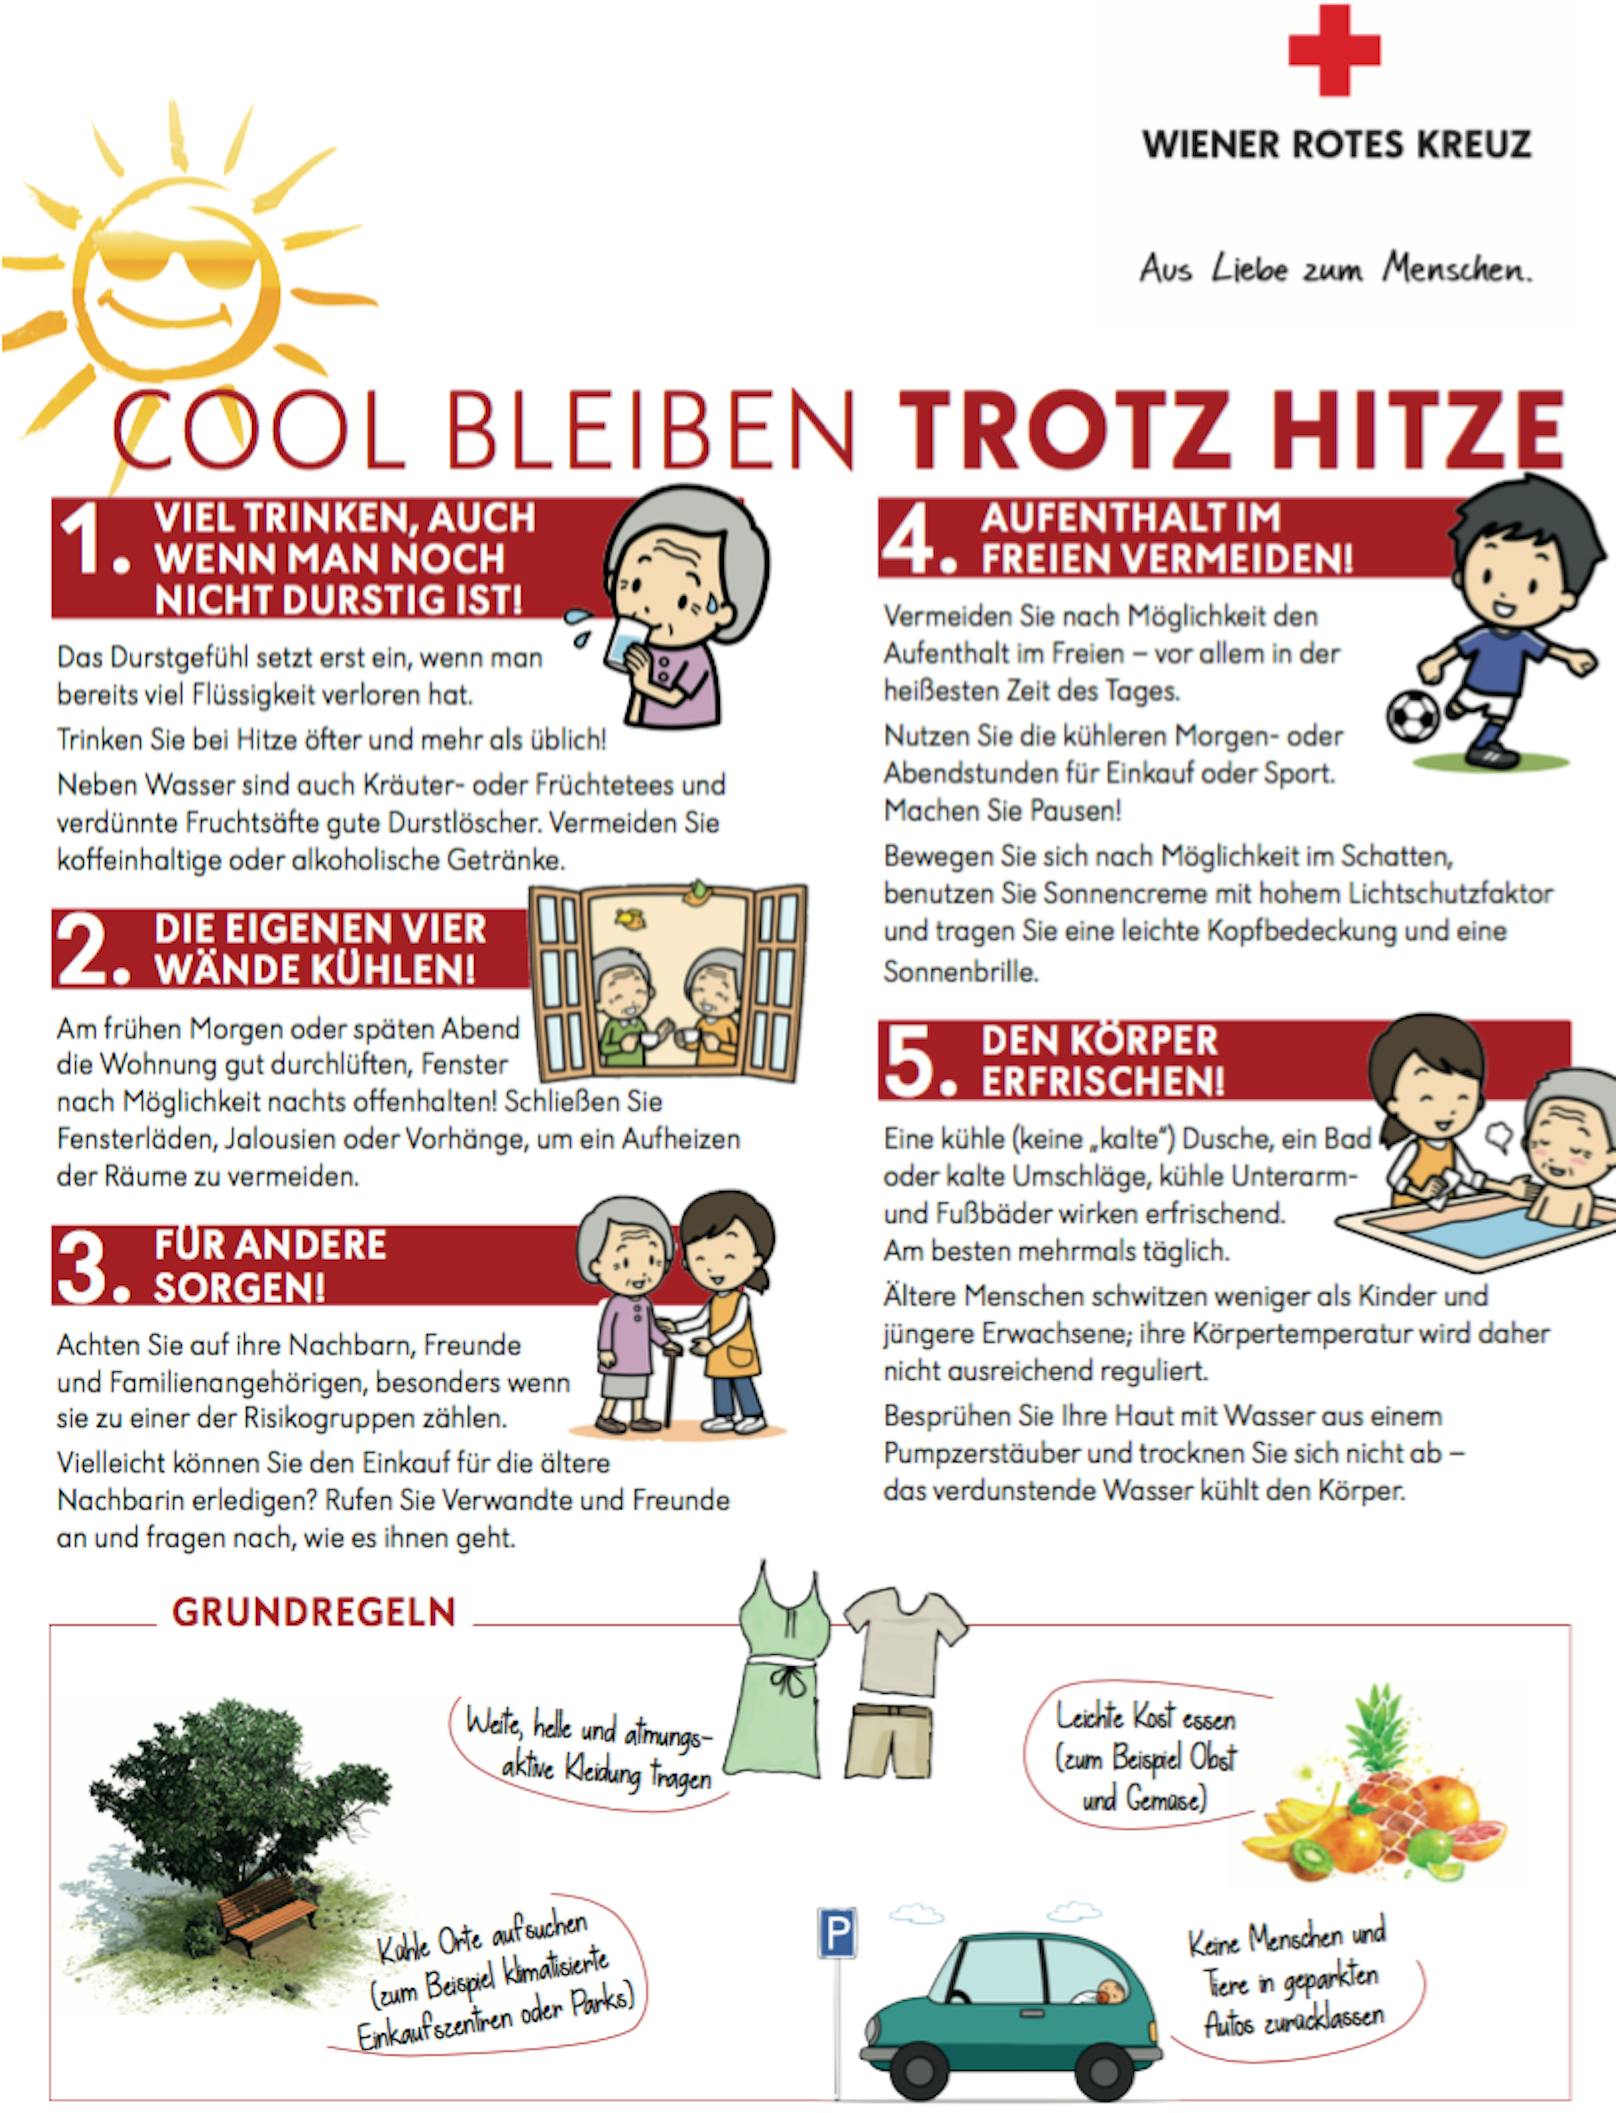 Das Wiener Rote Kreuz gibt Tipps gegen den Hitzestress.